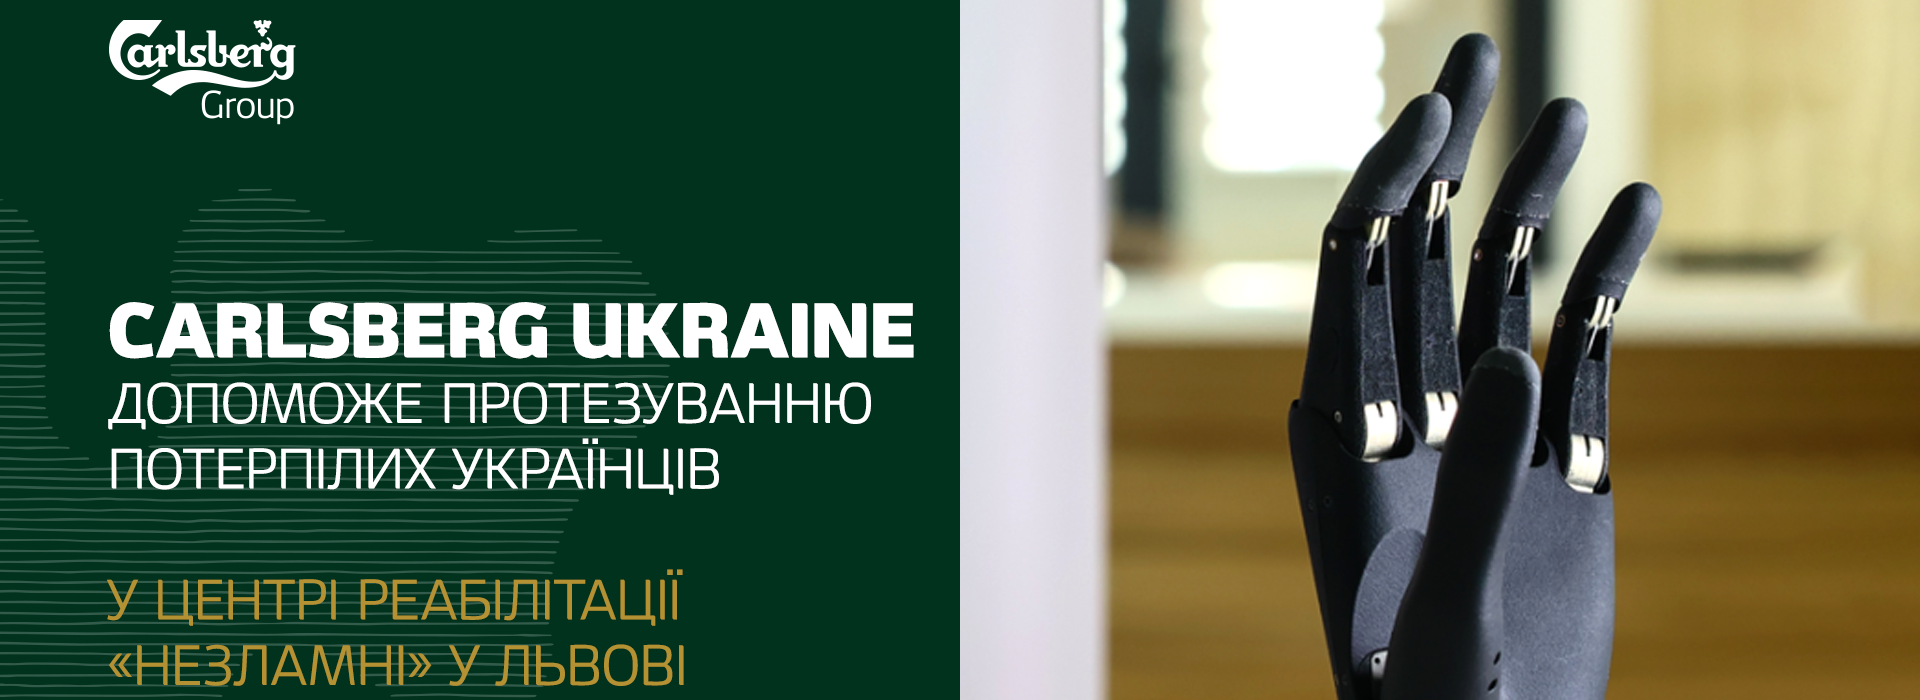 Carlsberg Ukraine Will Help Prosthetics to Injured Ukrainians at the “Nezlamni” Rehabilitation Center in Lviv